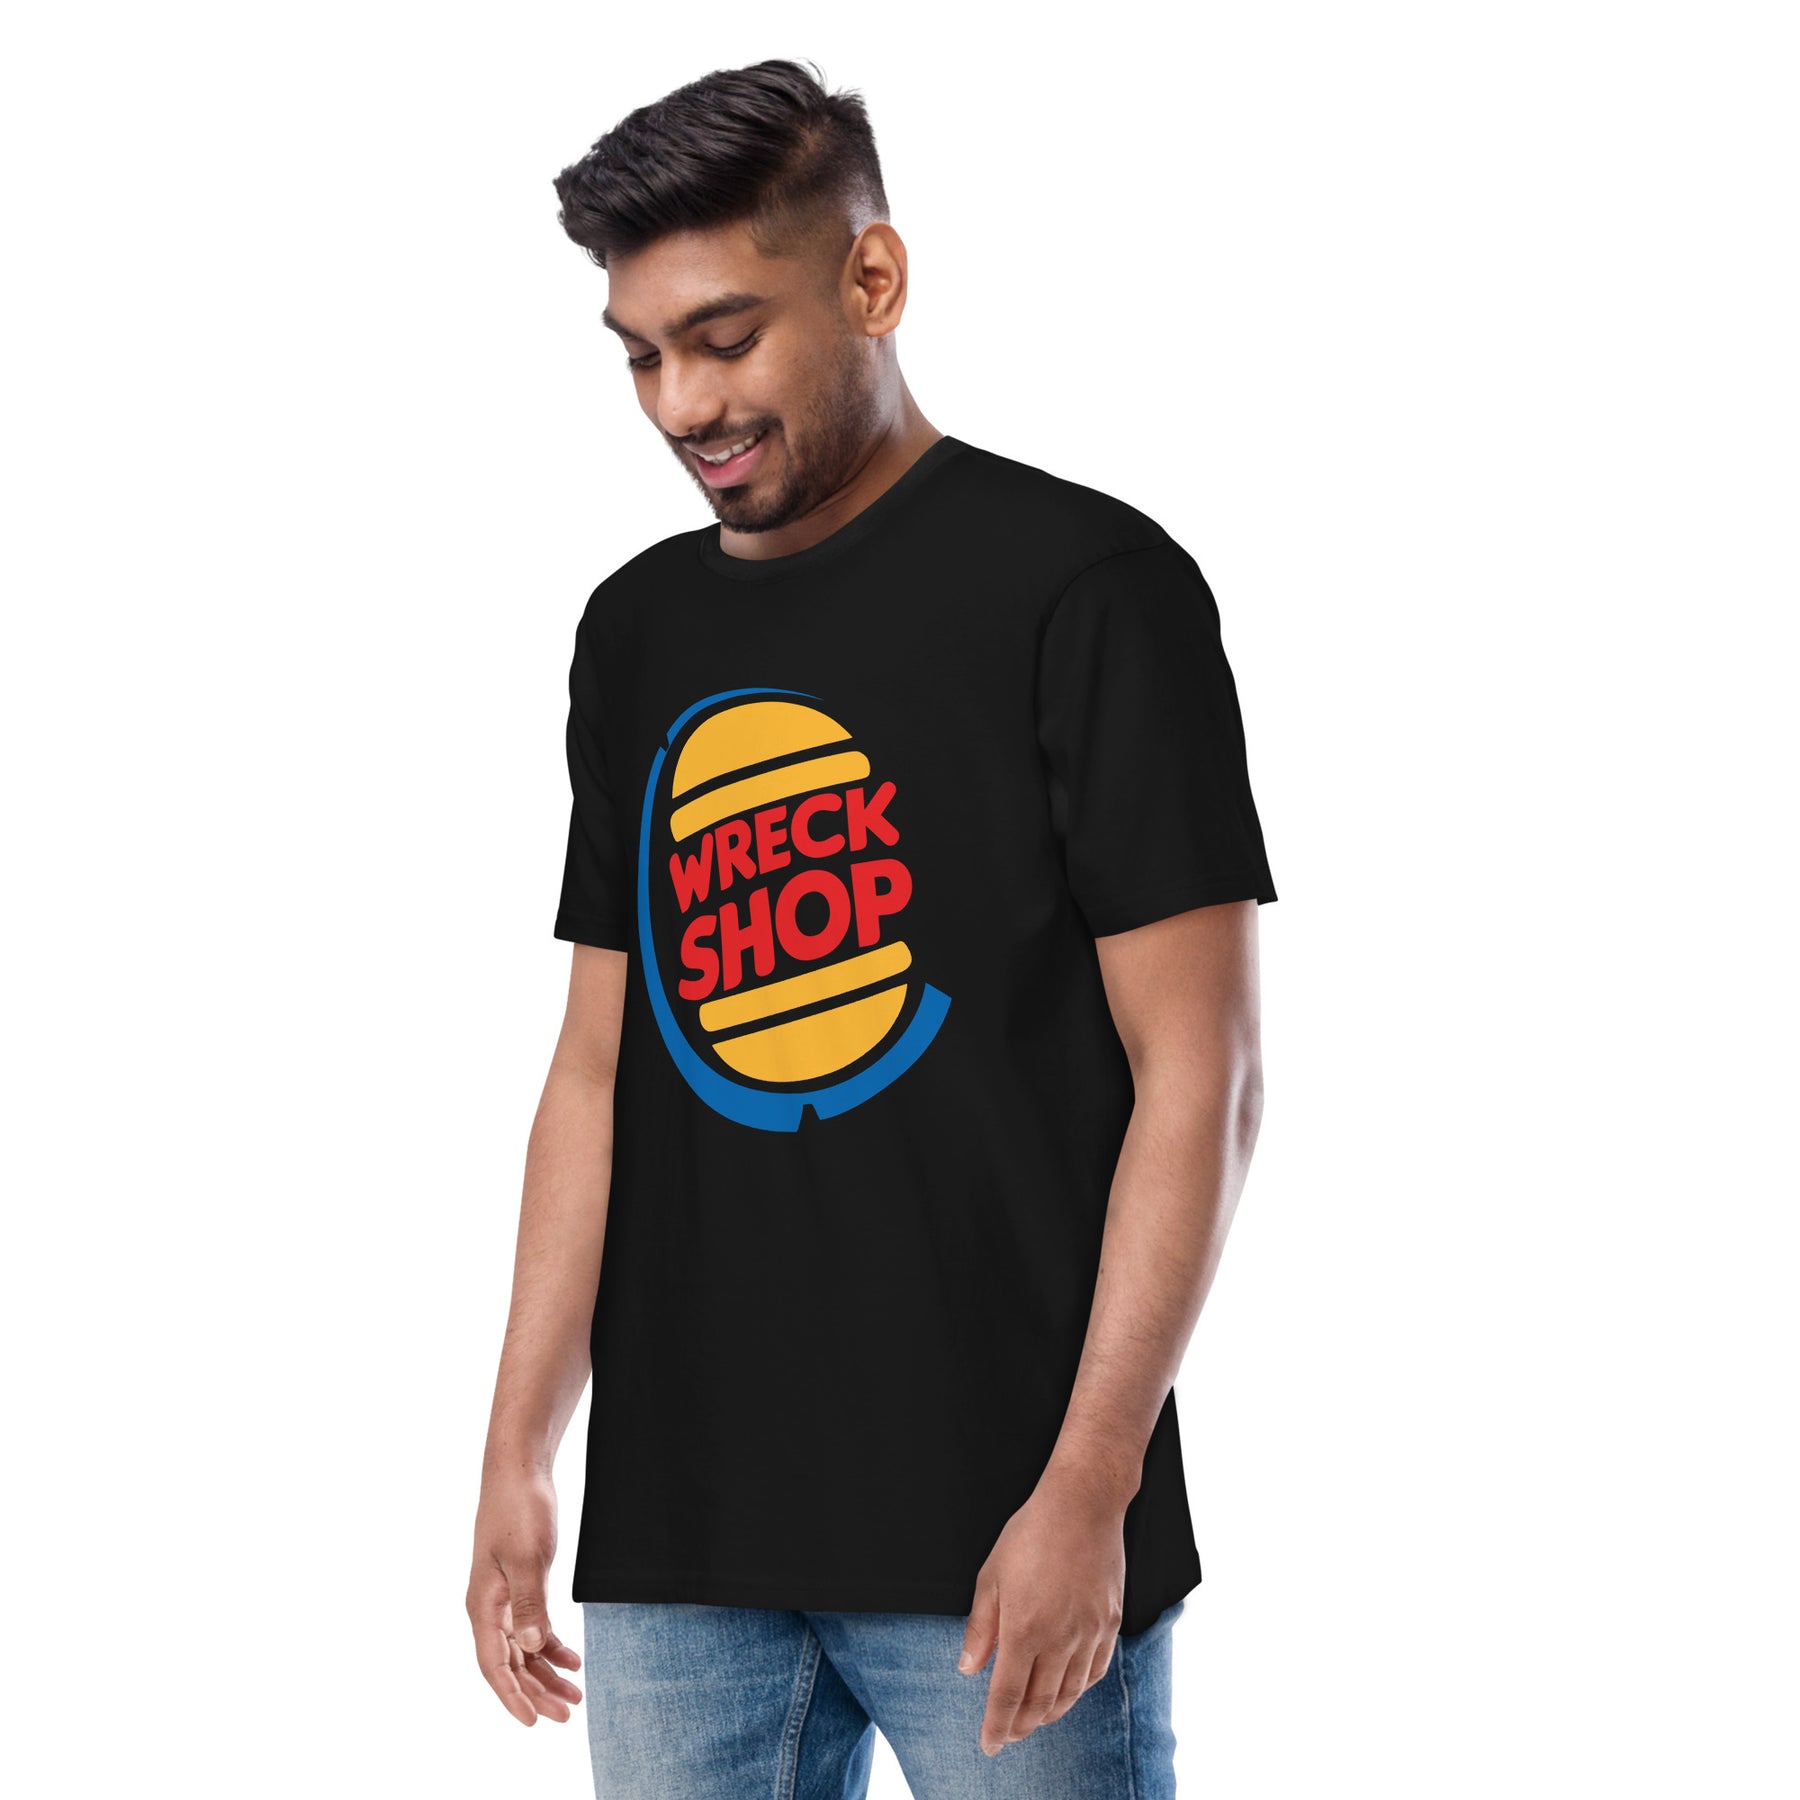 Wreckshop "Burger King" Parody Men’s premium heavyweight tee